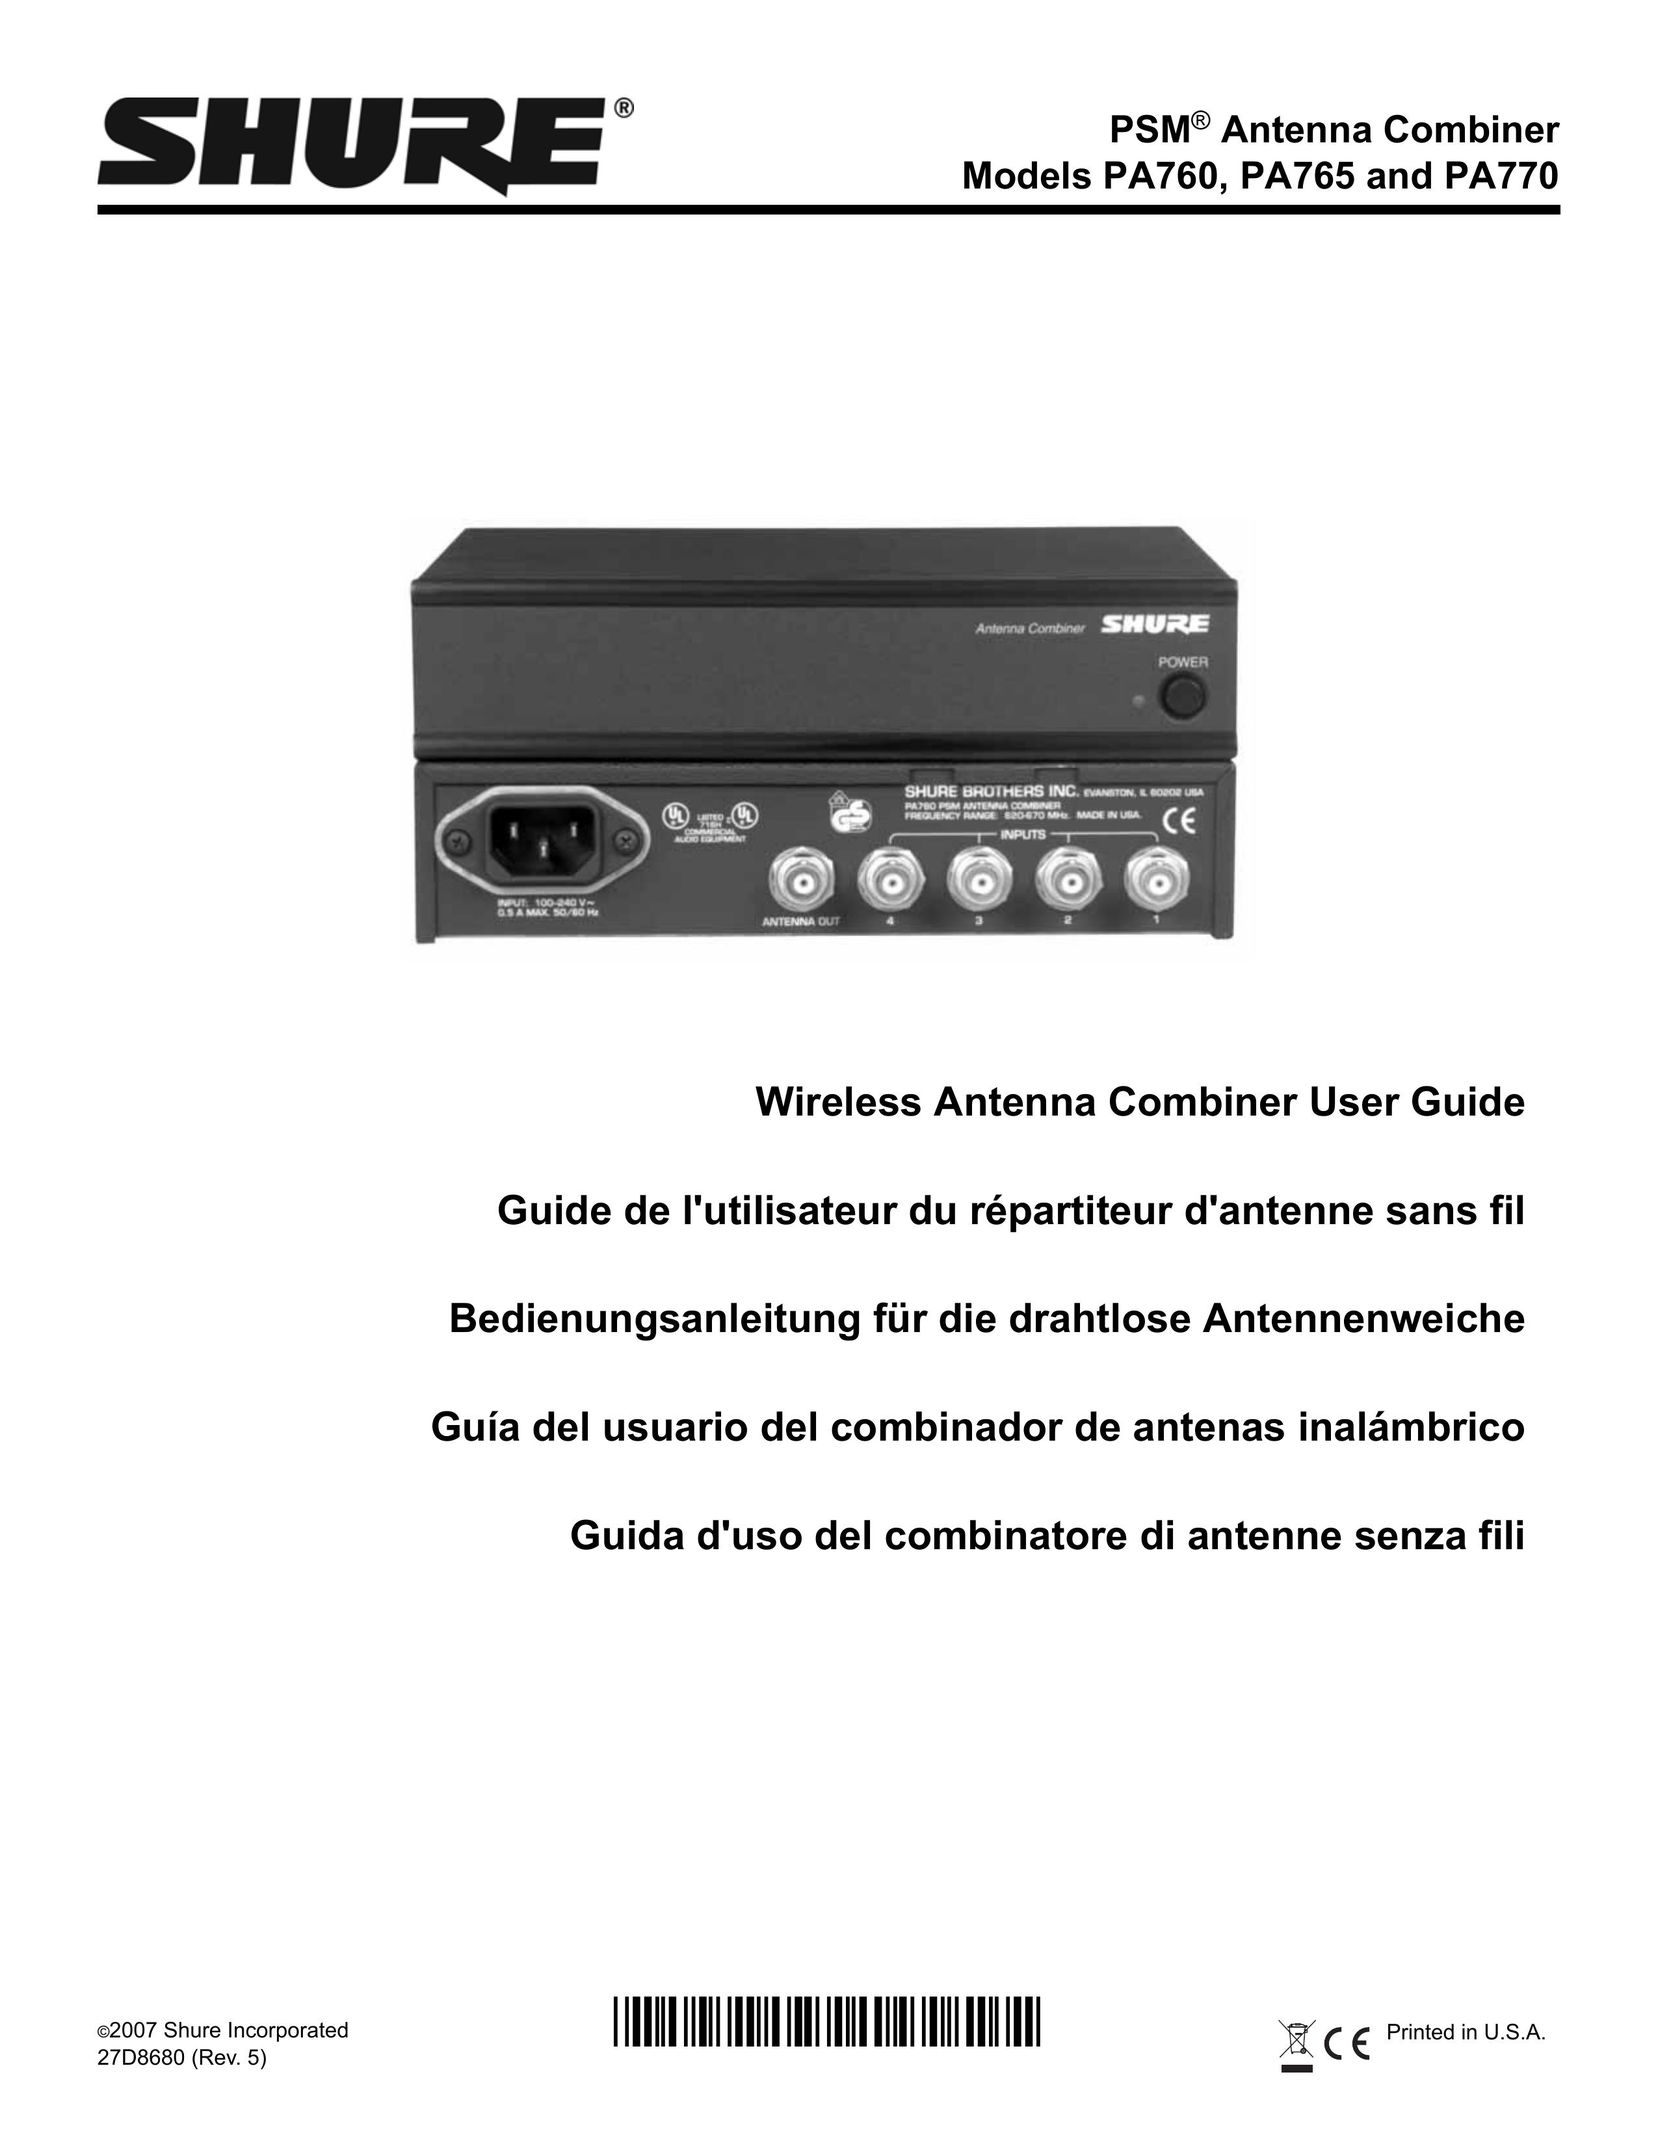 Shure PA765 Satellite TV System User Manual